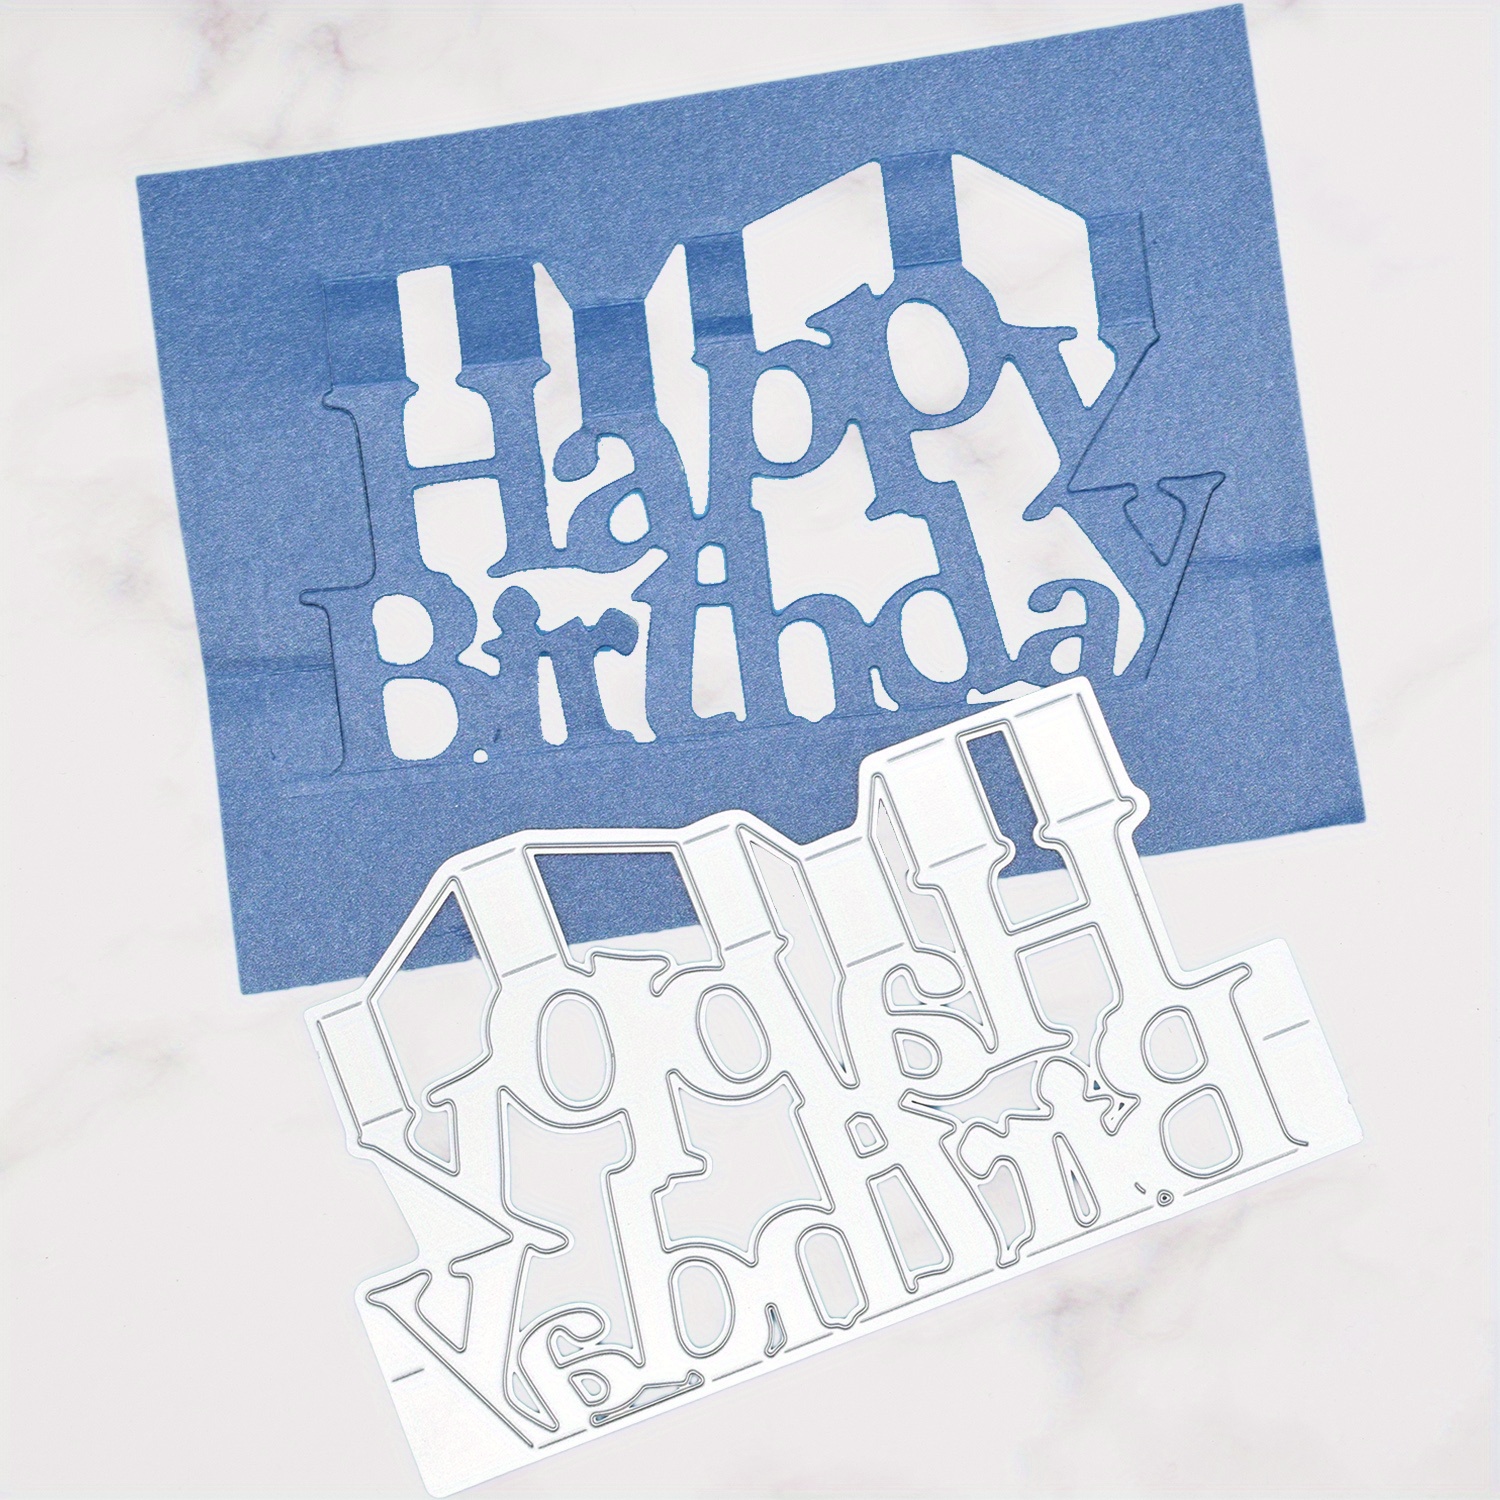 1pc 2-Layered Happy Birthday Metal Die Cuts For Card Making, DIY